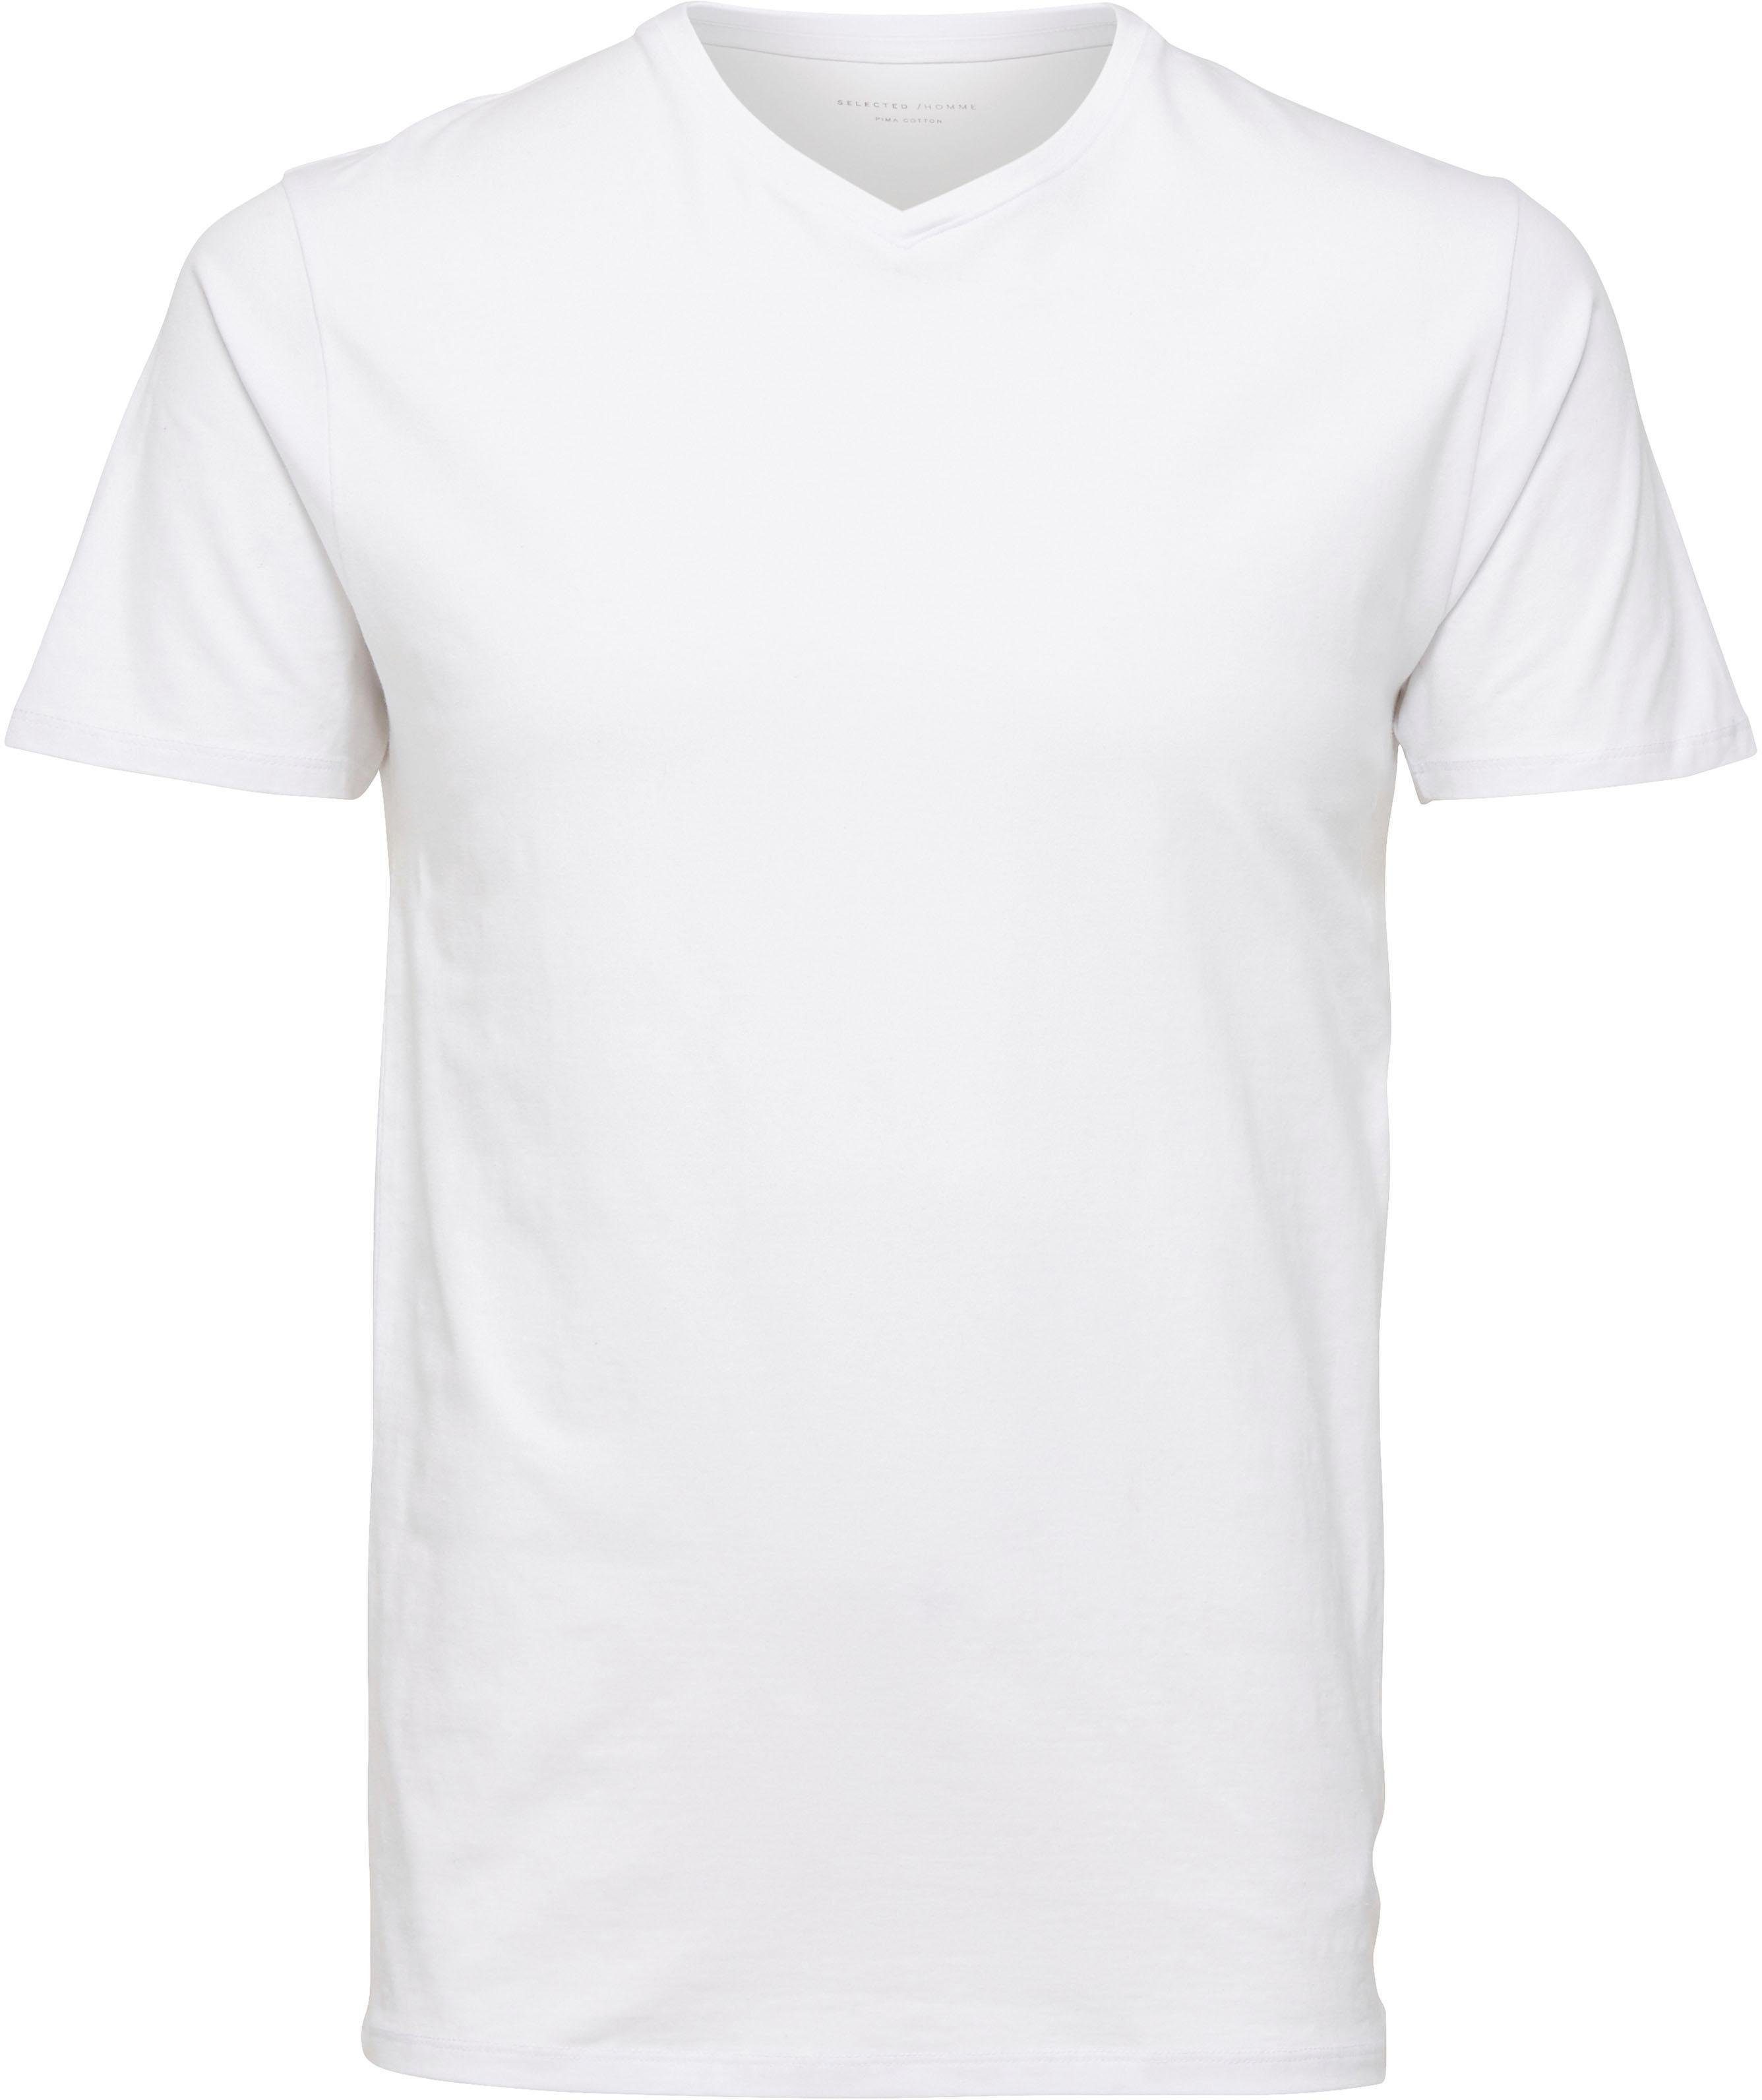 Perfekte HOMME Elasthananteil Passform V-Shirt, durch den SELECTED V-Shirt Basic